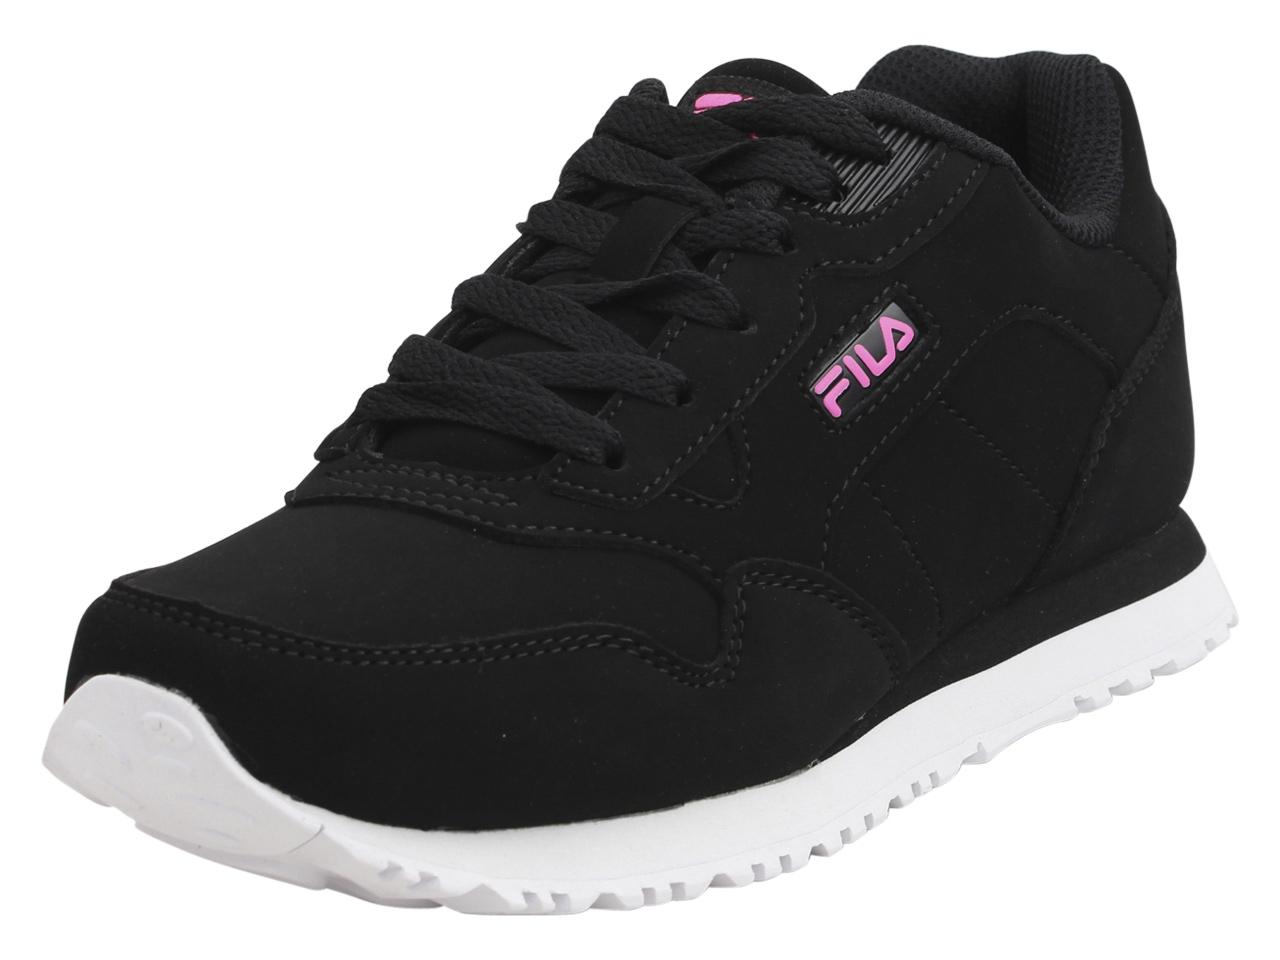 Fila Women's Cress Sneakers Shoes - Black/Knock Out Pink/White - 11 B(M) US